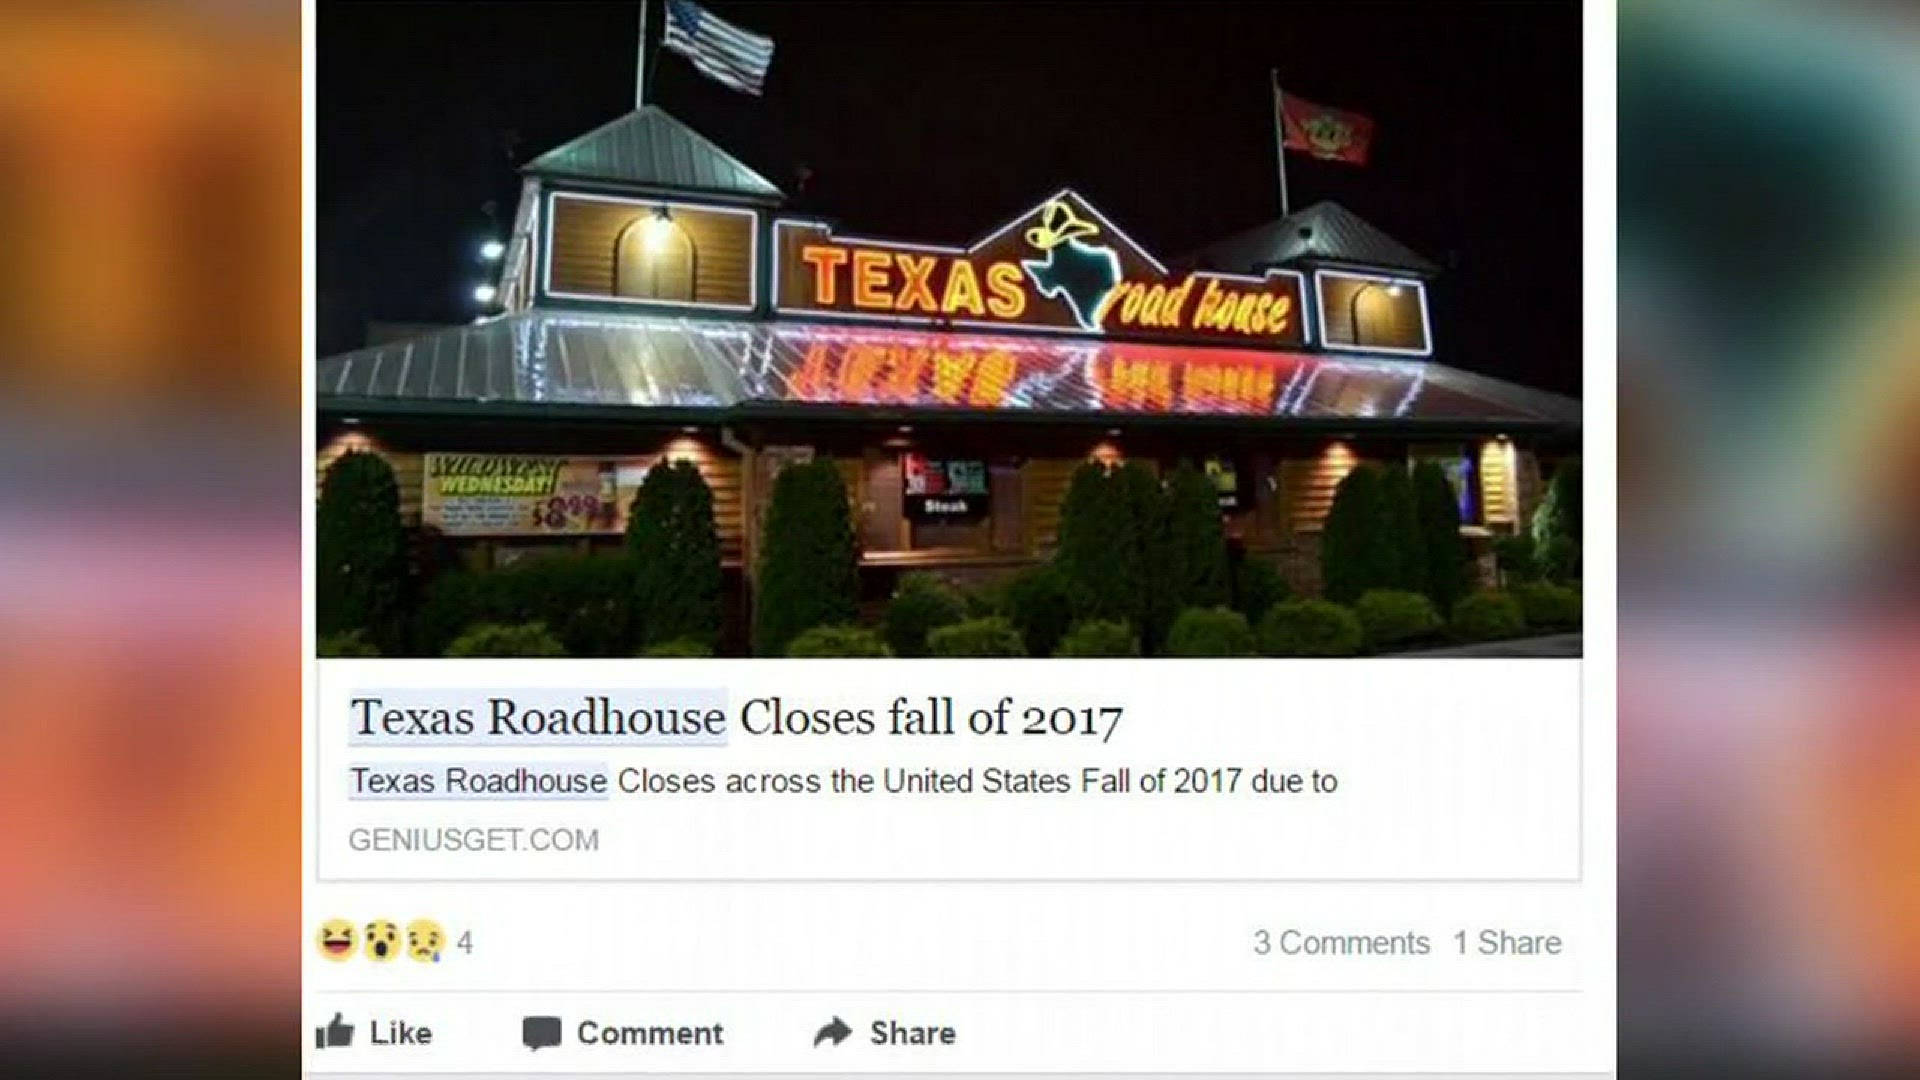 VERIFY Is Texas Roadhouse closing?